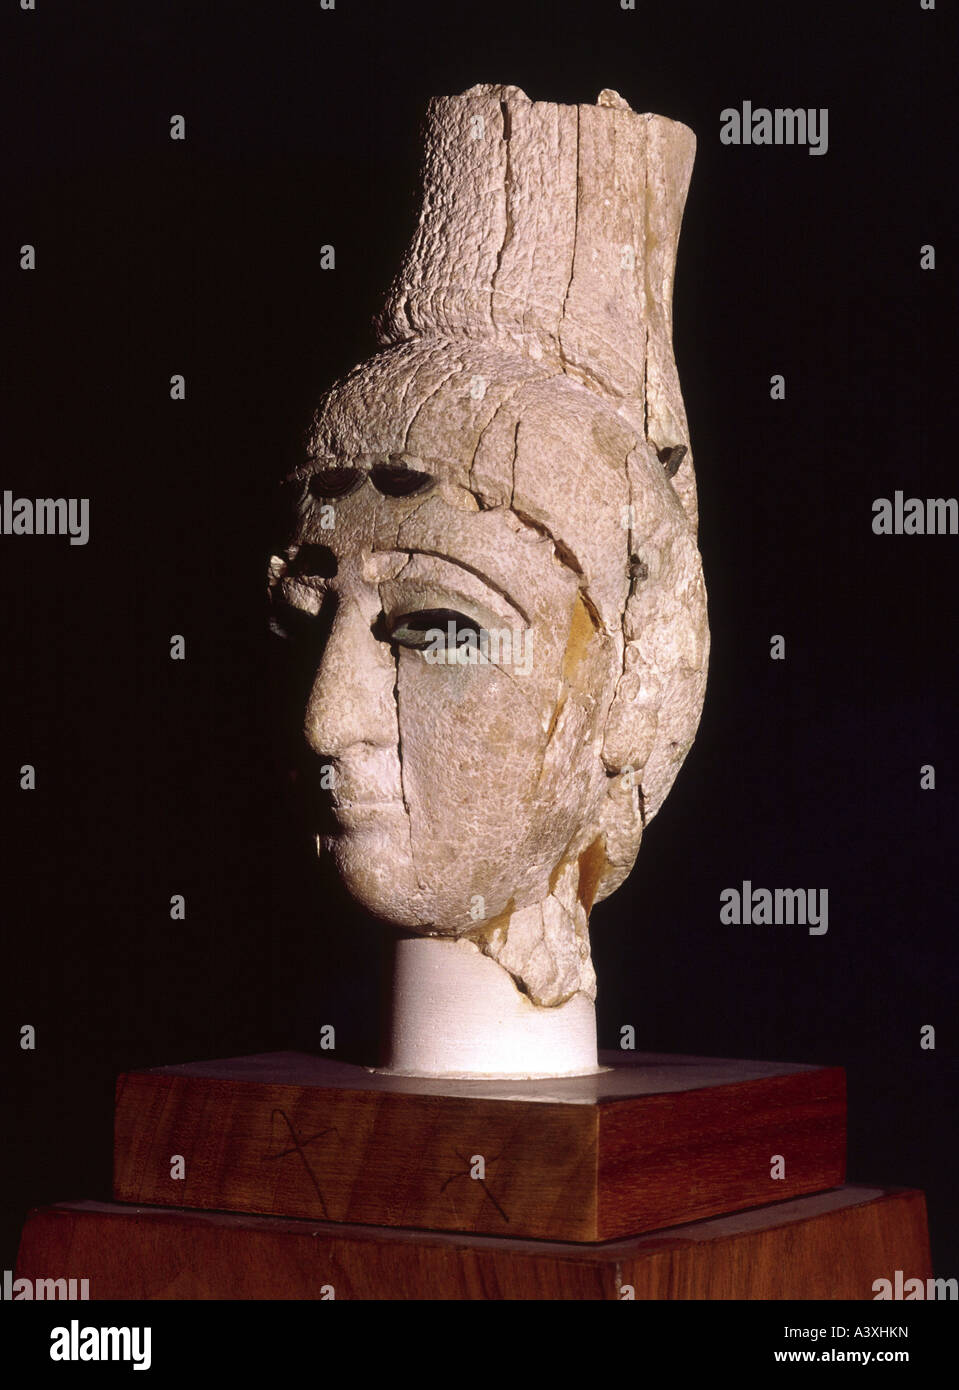 fine arts, Ugarit (Ras Shamra), sculpture, head of man from royal palace, 13th century B.C., ivory, gold incrustation, national Stock Photo